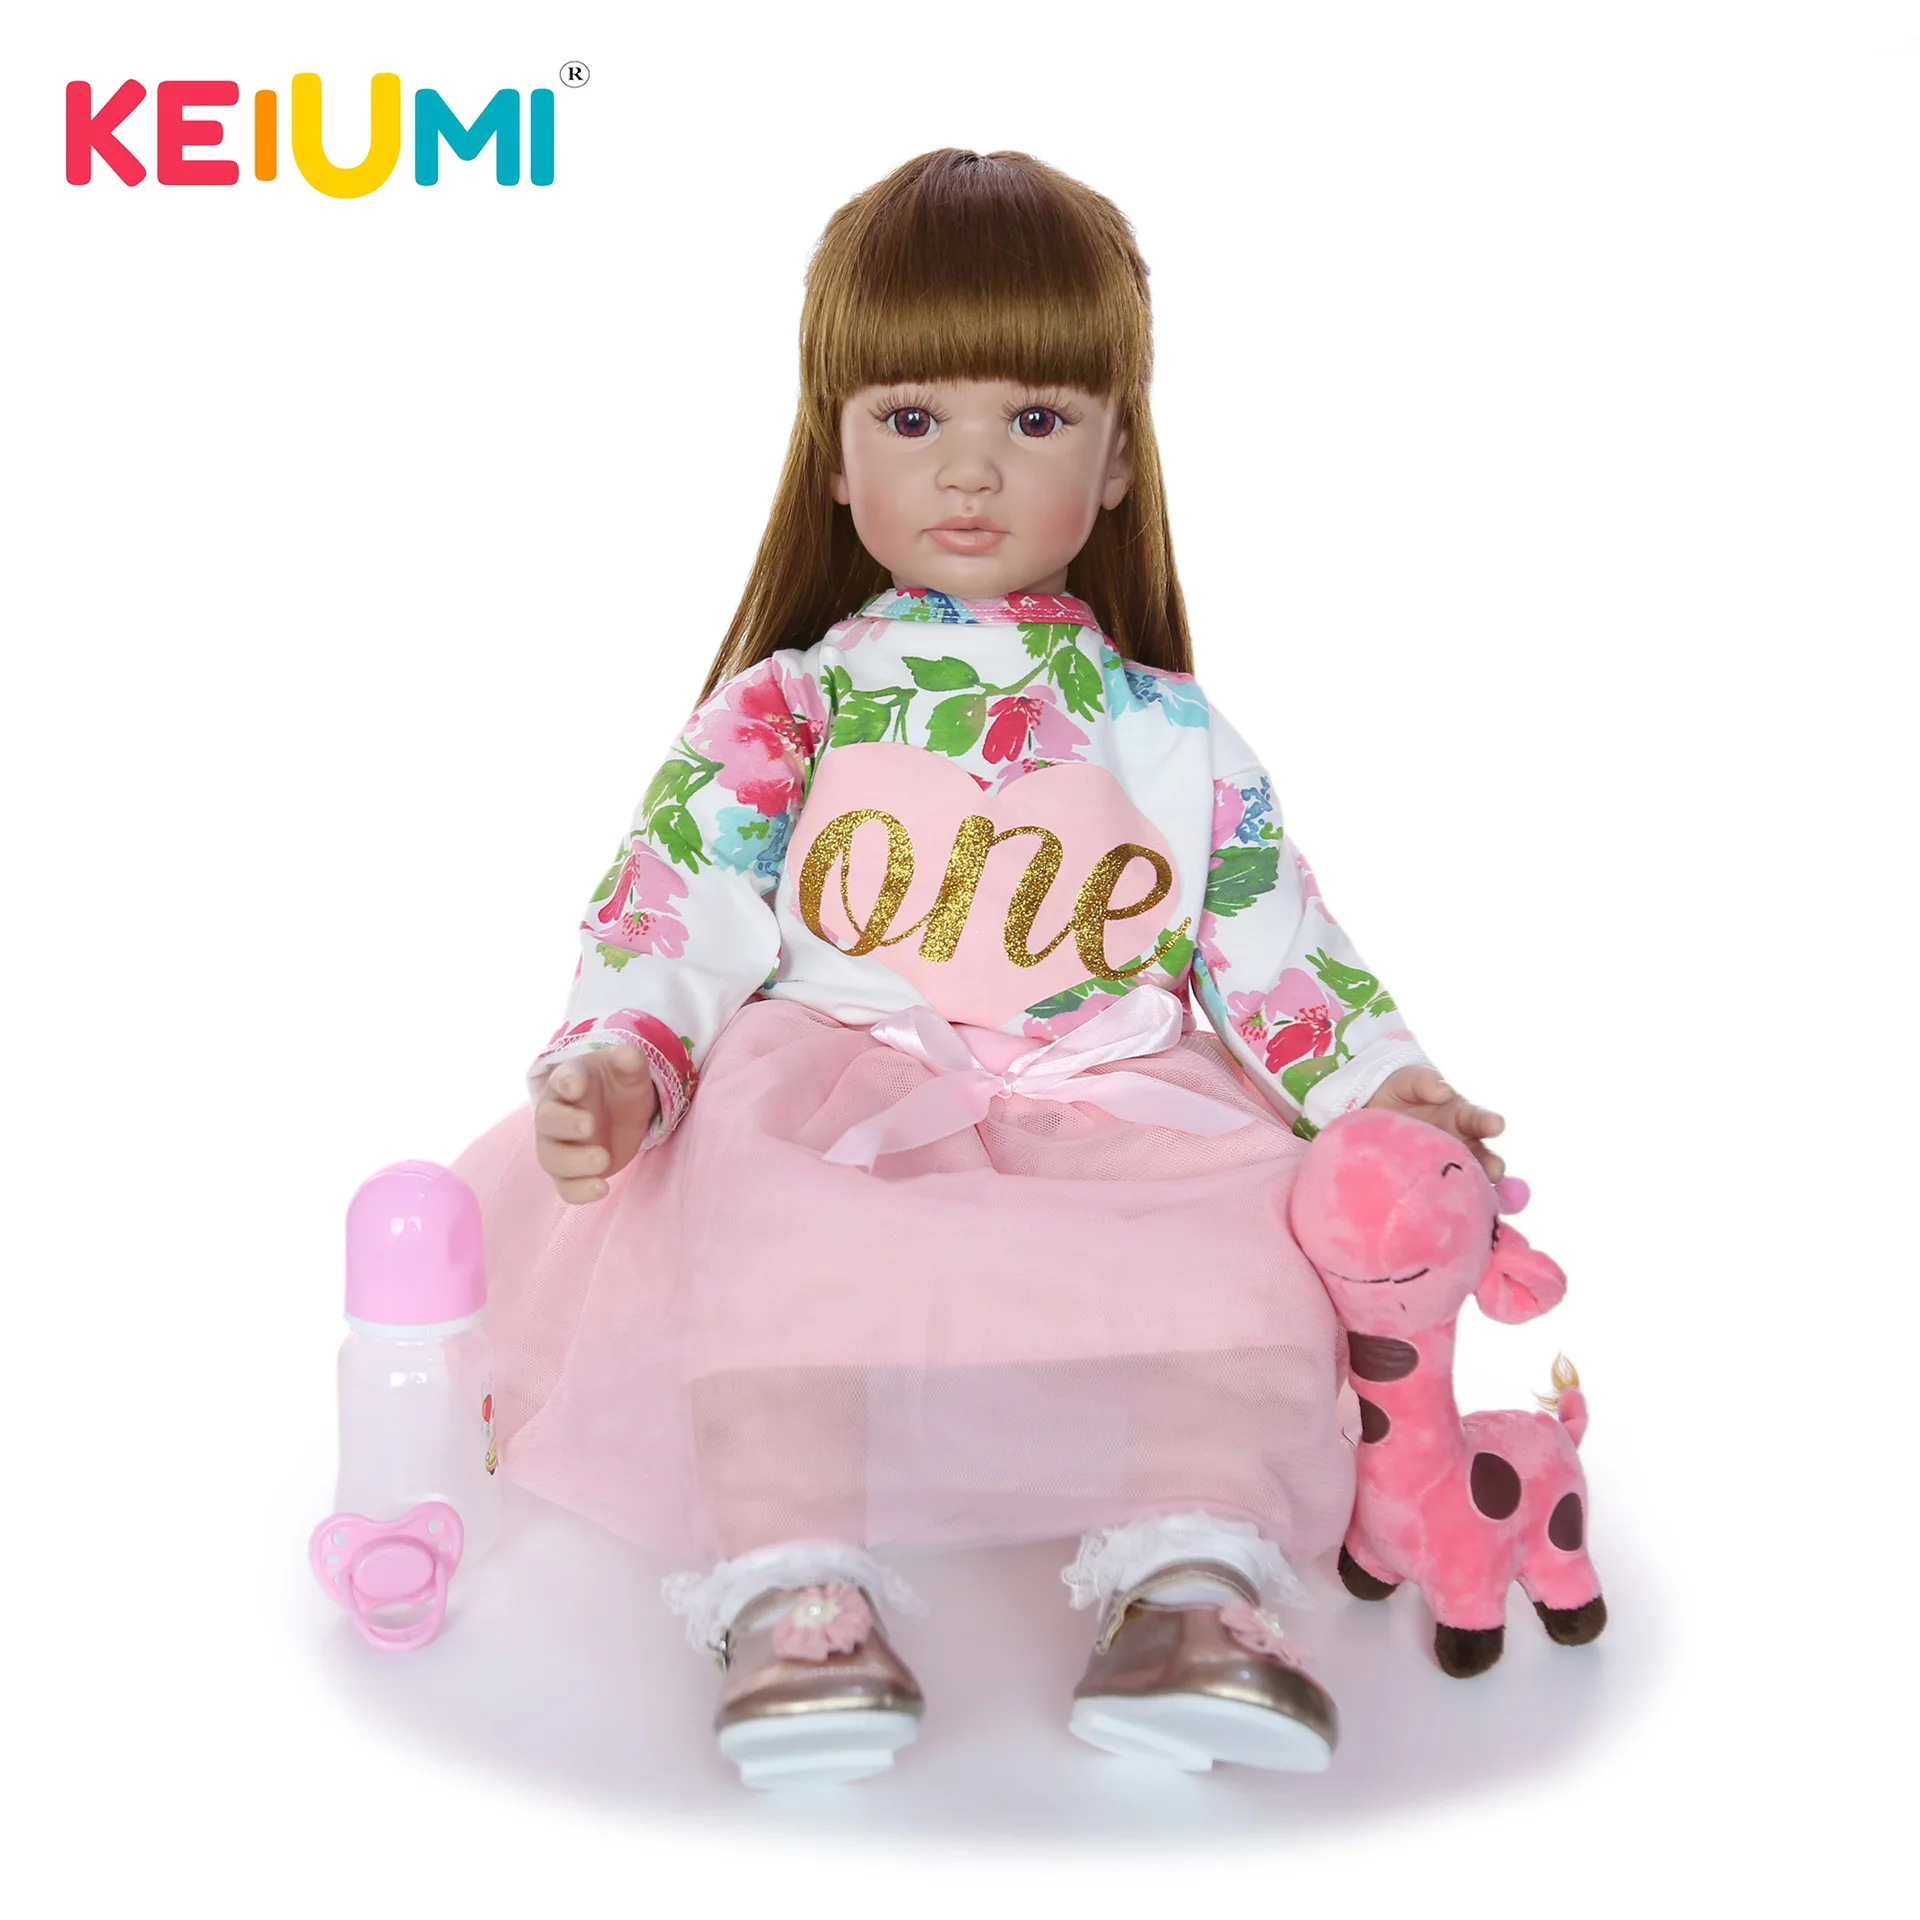  Keiumi 24-Inch Reborn Baby Doll Reborn Baby Cloth Body Model Infant AliExpress New Style